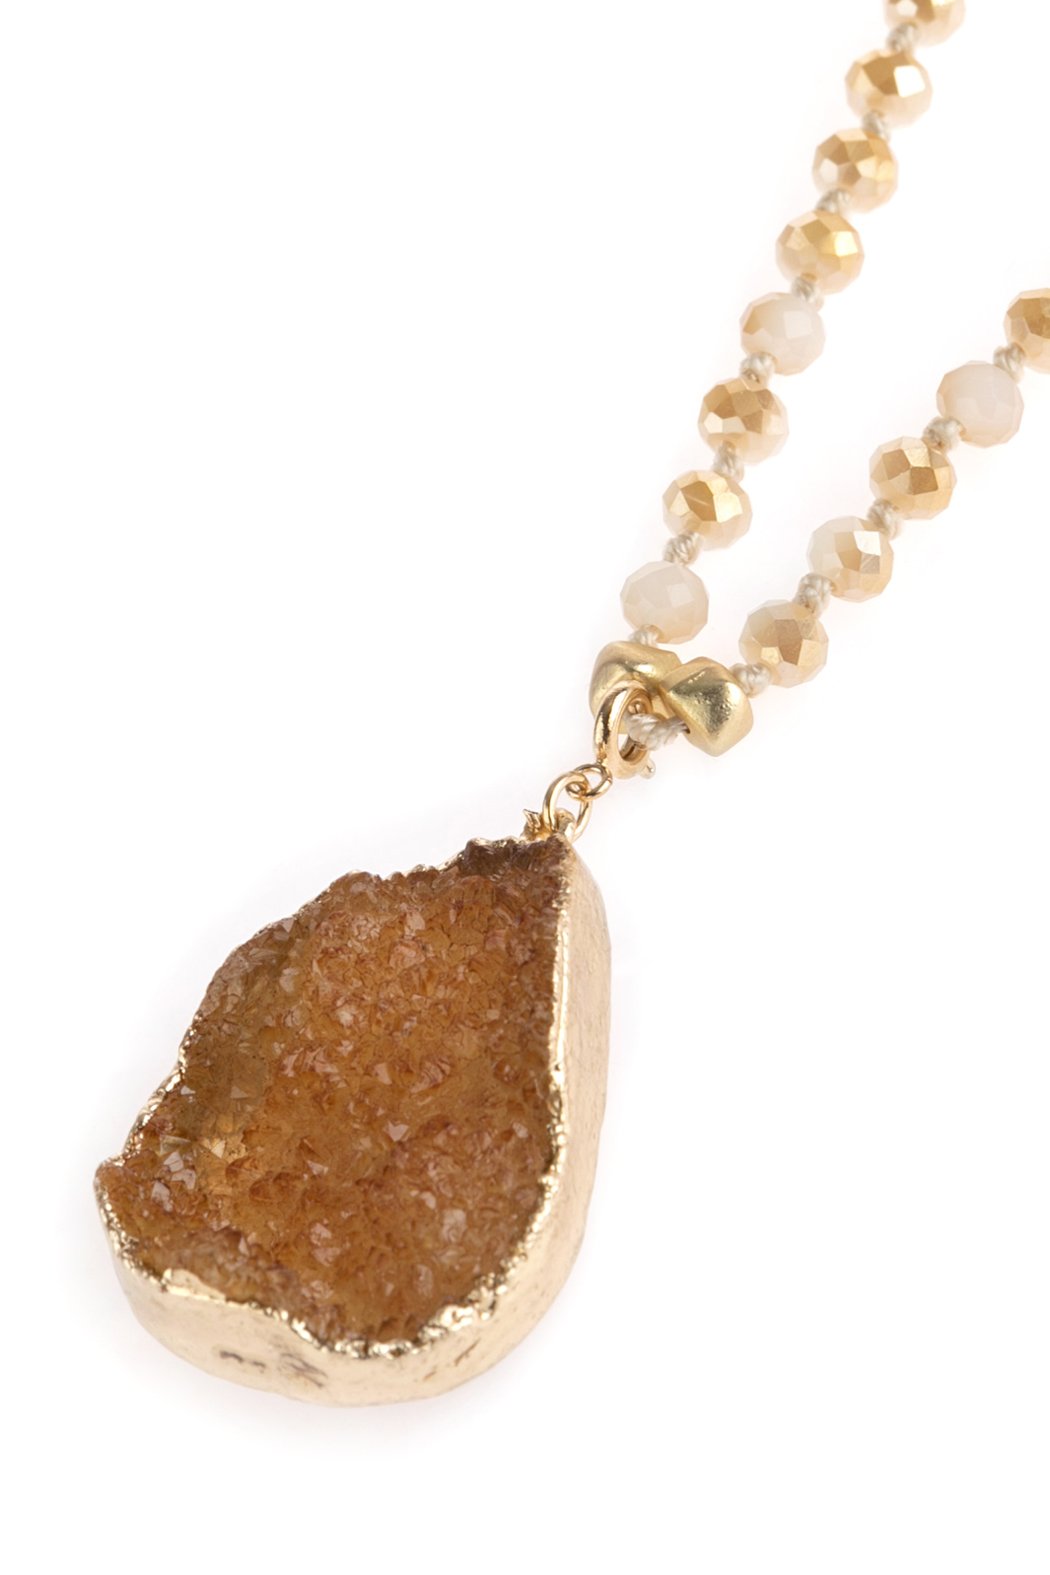 Hdn2749 - Druzy Stone Pendant Glass Beaded Necklace